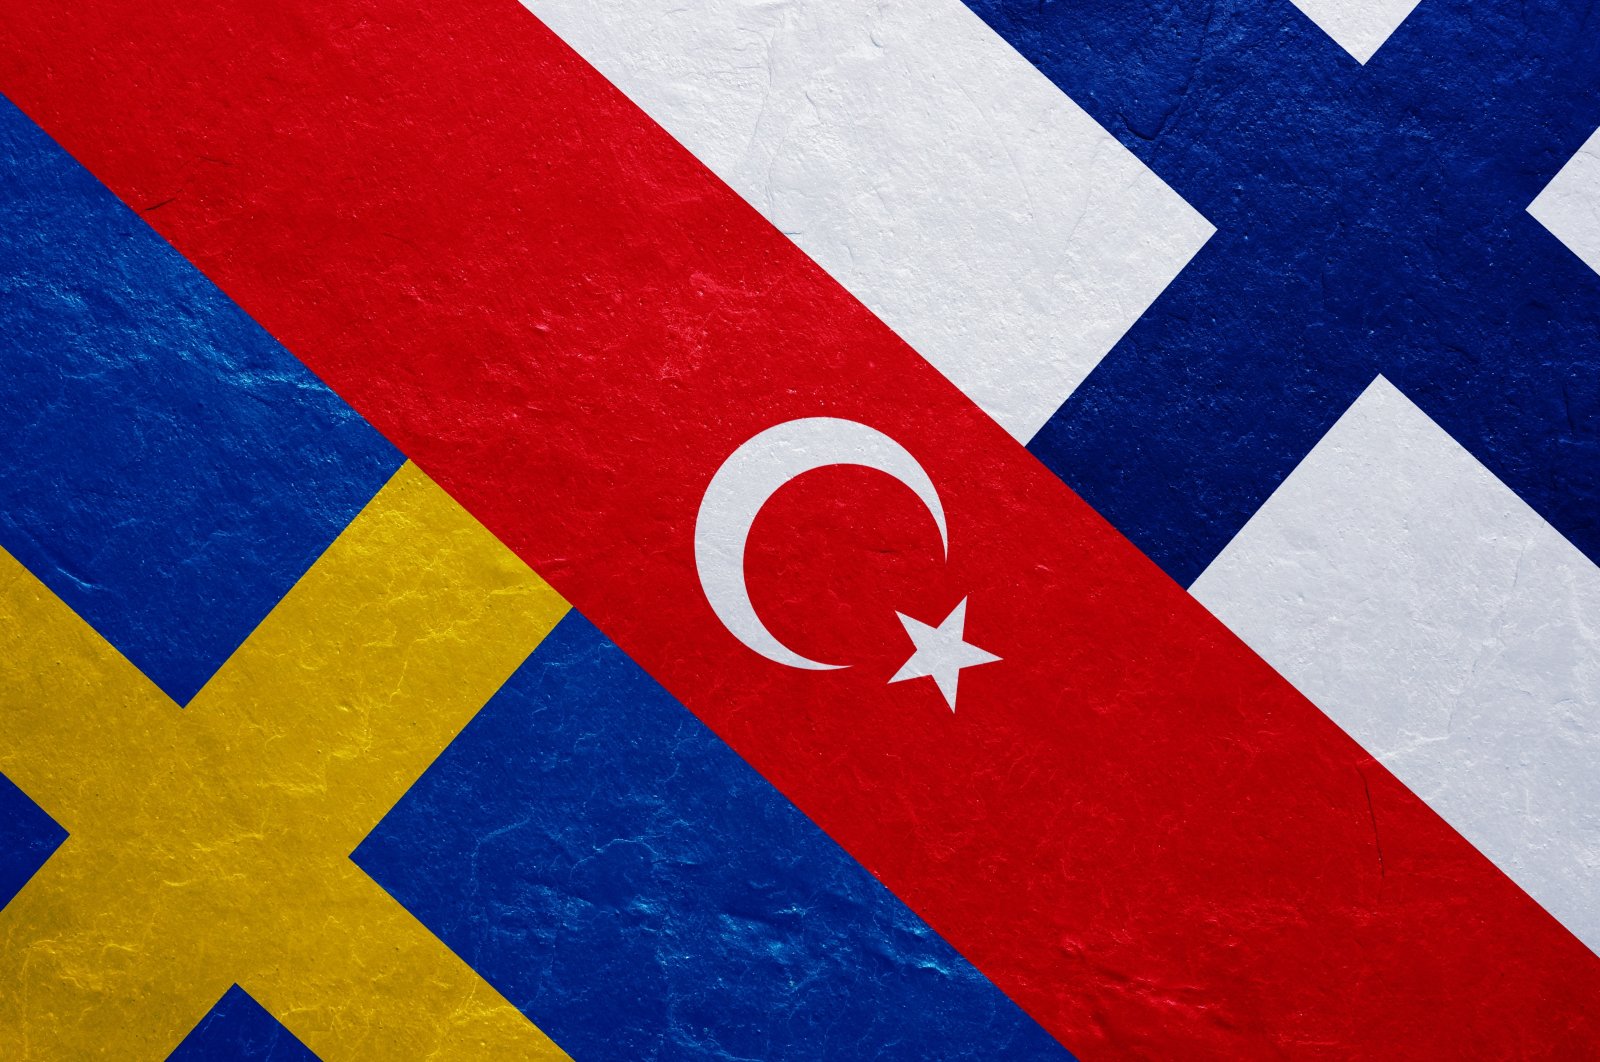 NATO, terorisme, Turki: Siapa yang harus membujuk siapa?